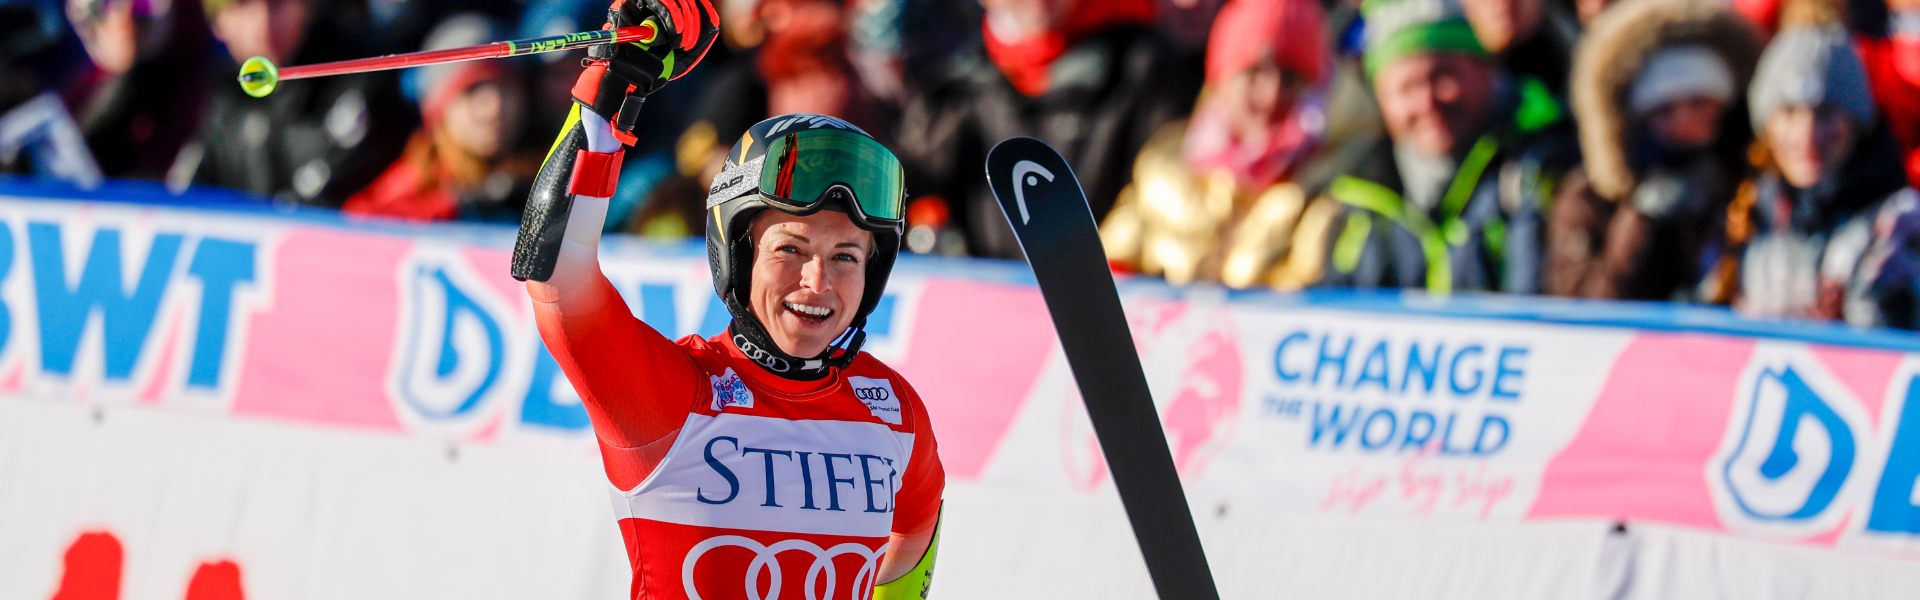 Lara Gut-Behrami races Giant Slalom to perfection